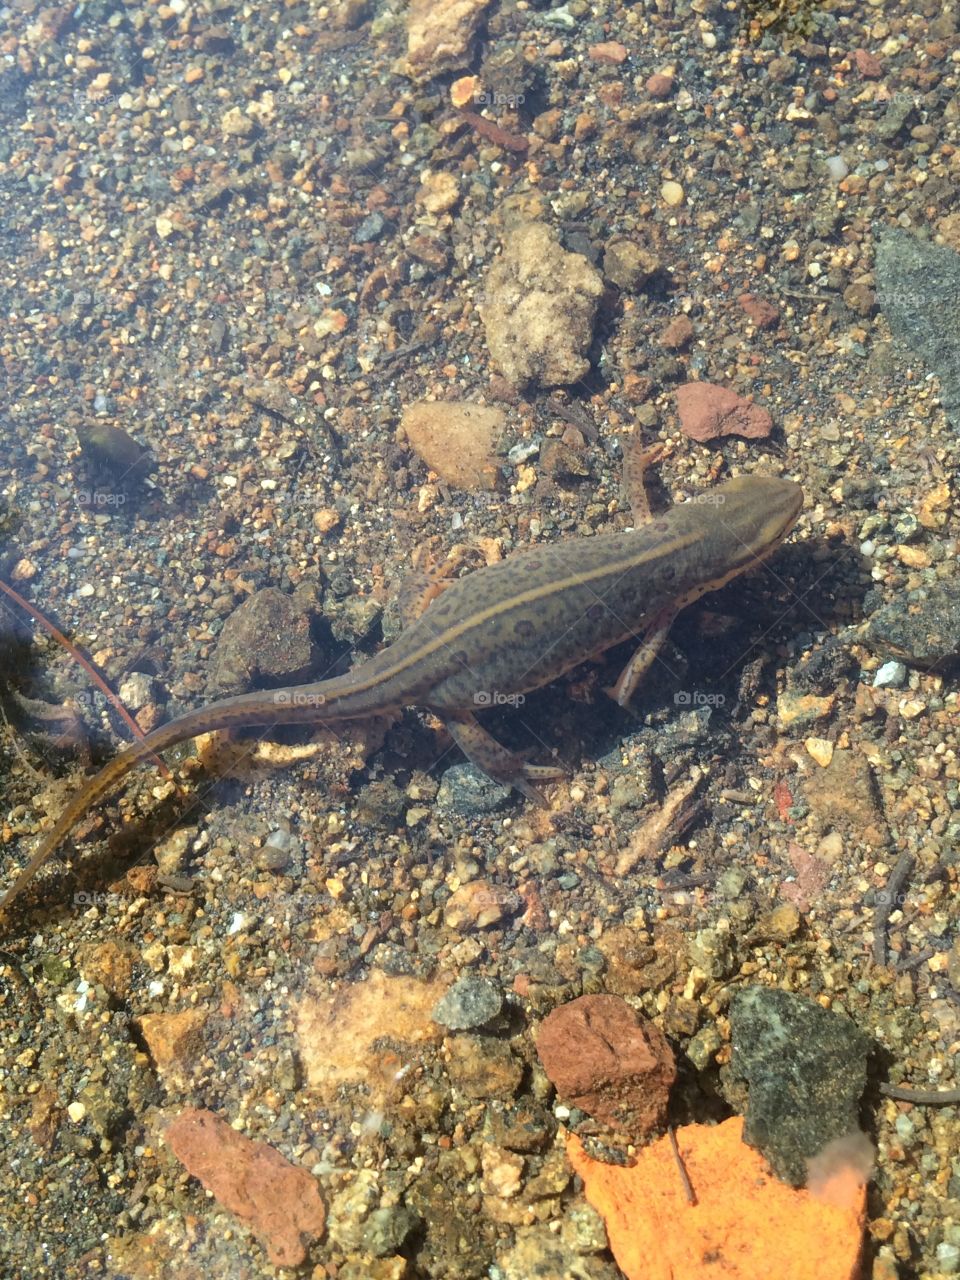 Northern newt